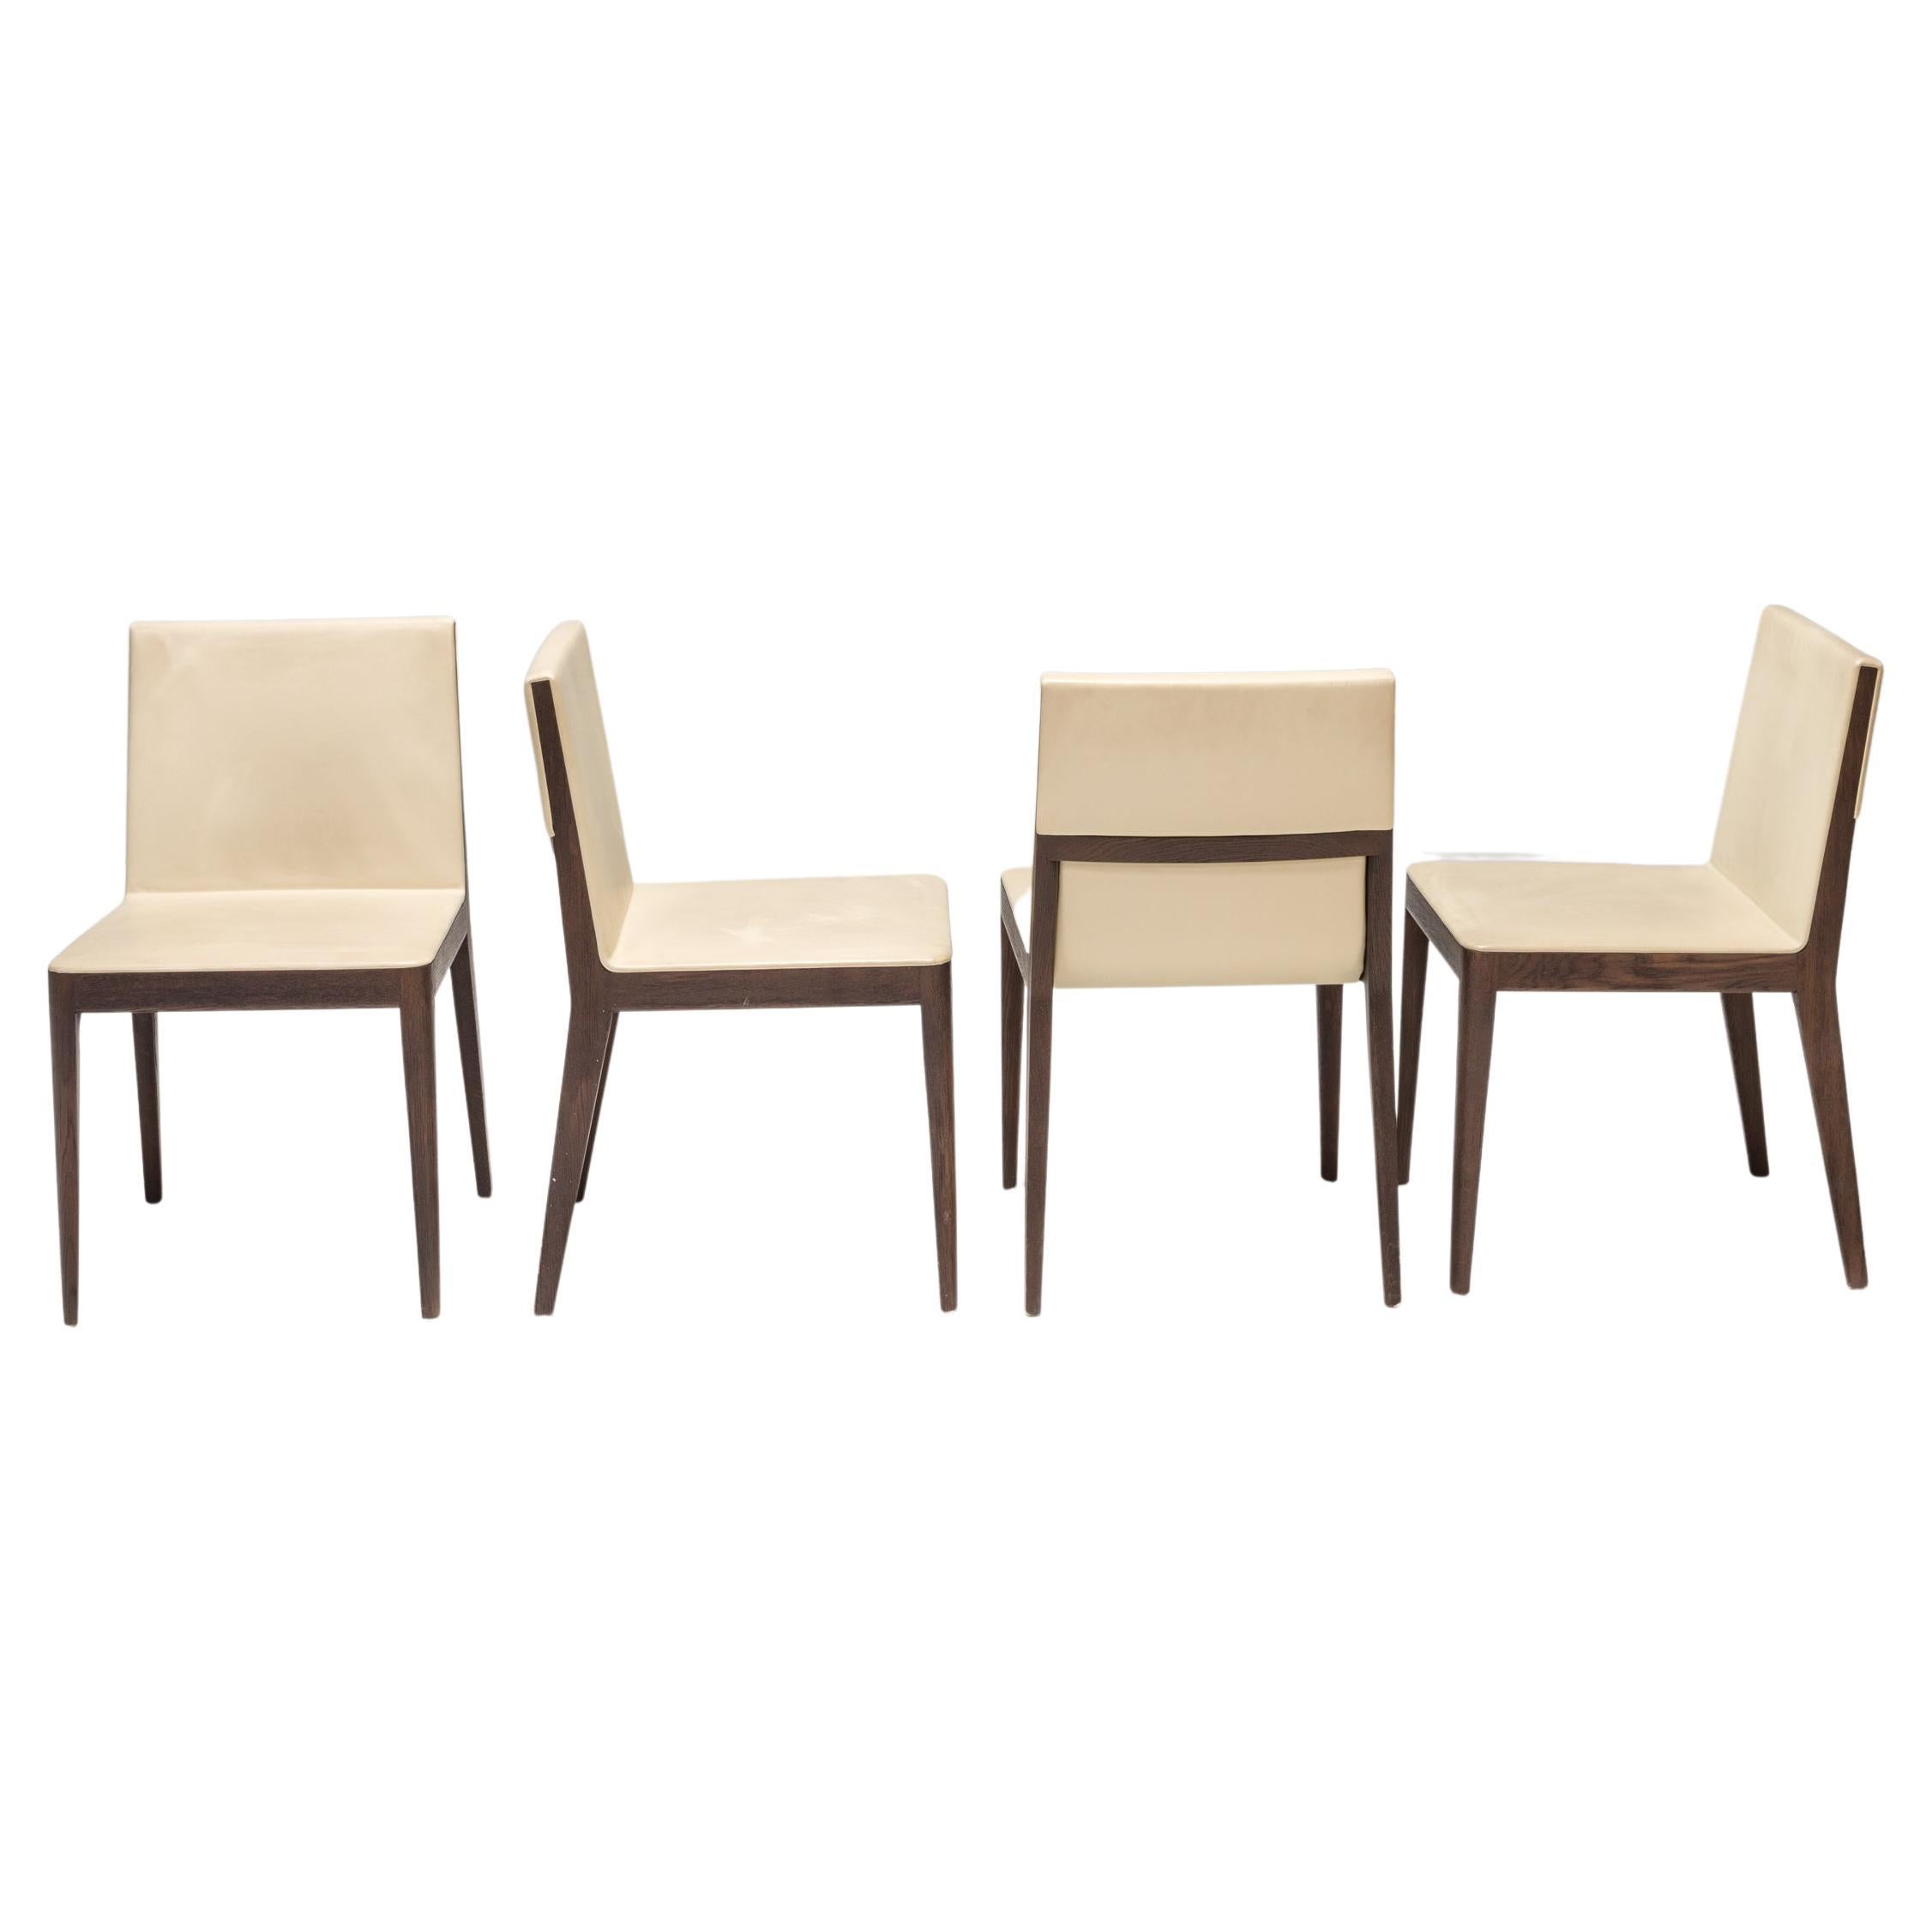 B&B Italia by Antonio Citterio Beige Leather & Walnut EL Dining Chairs, Set of 4